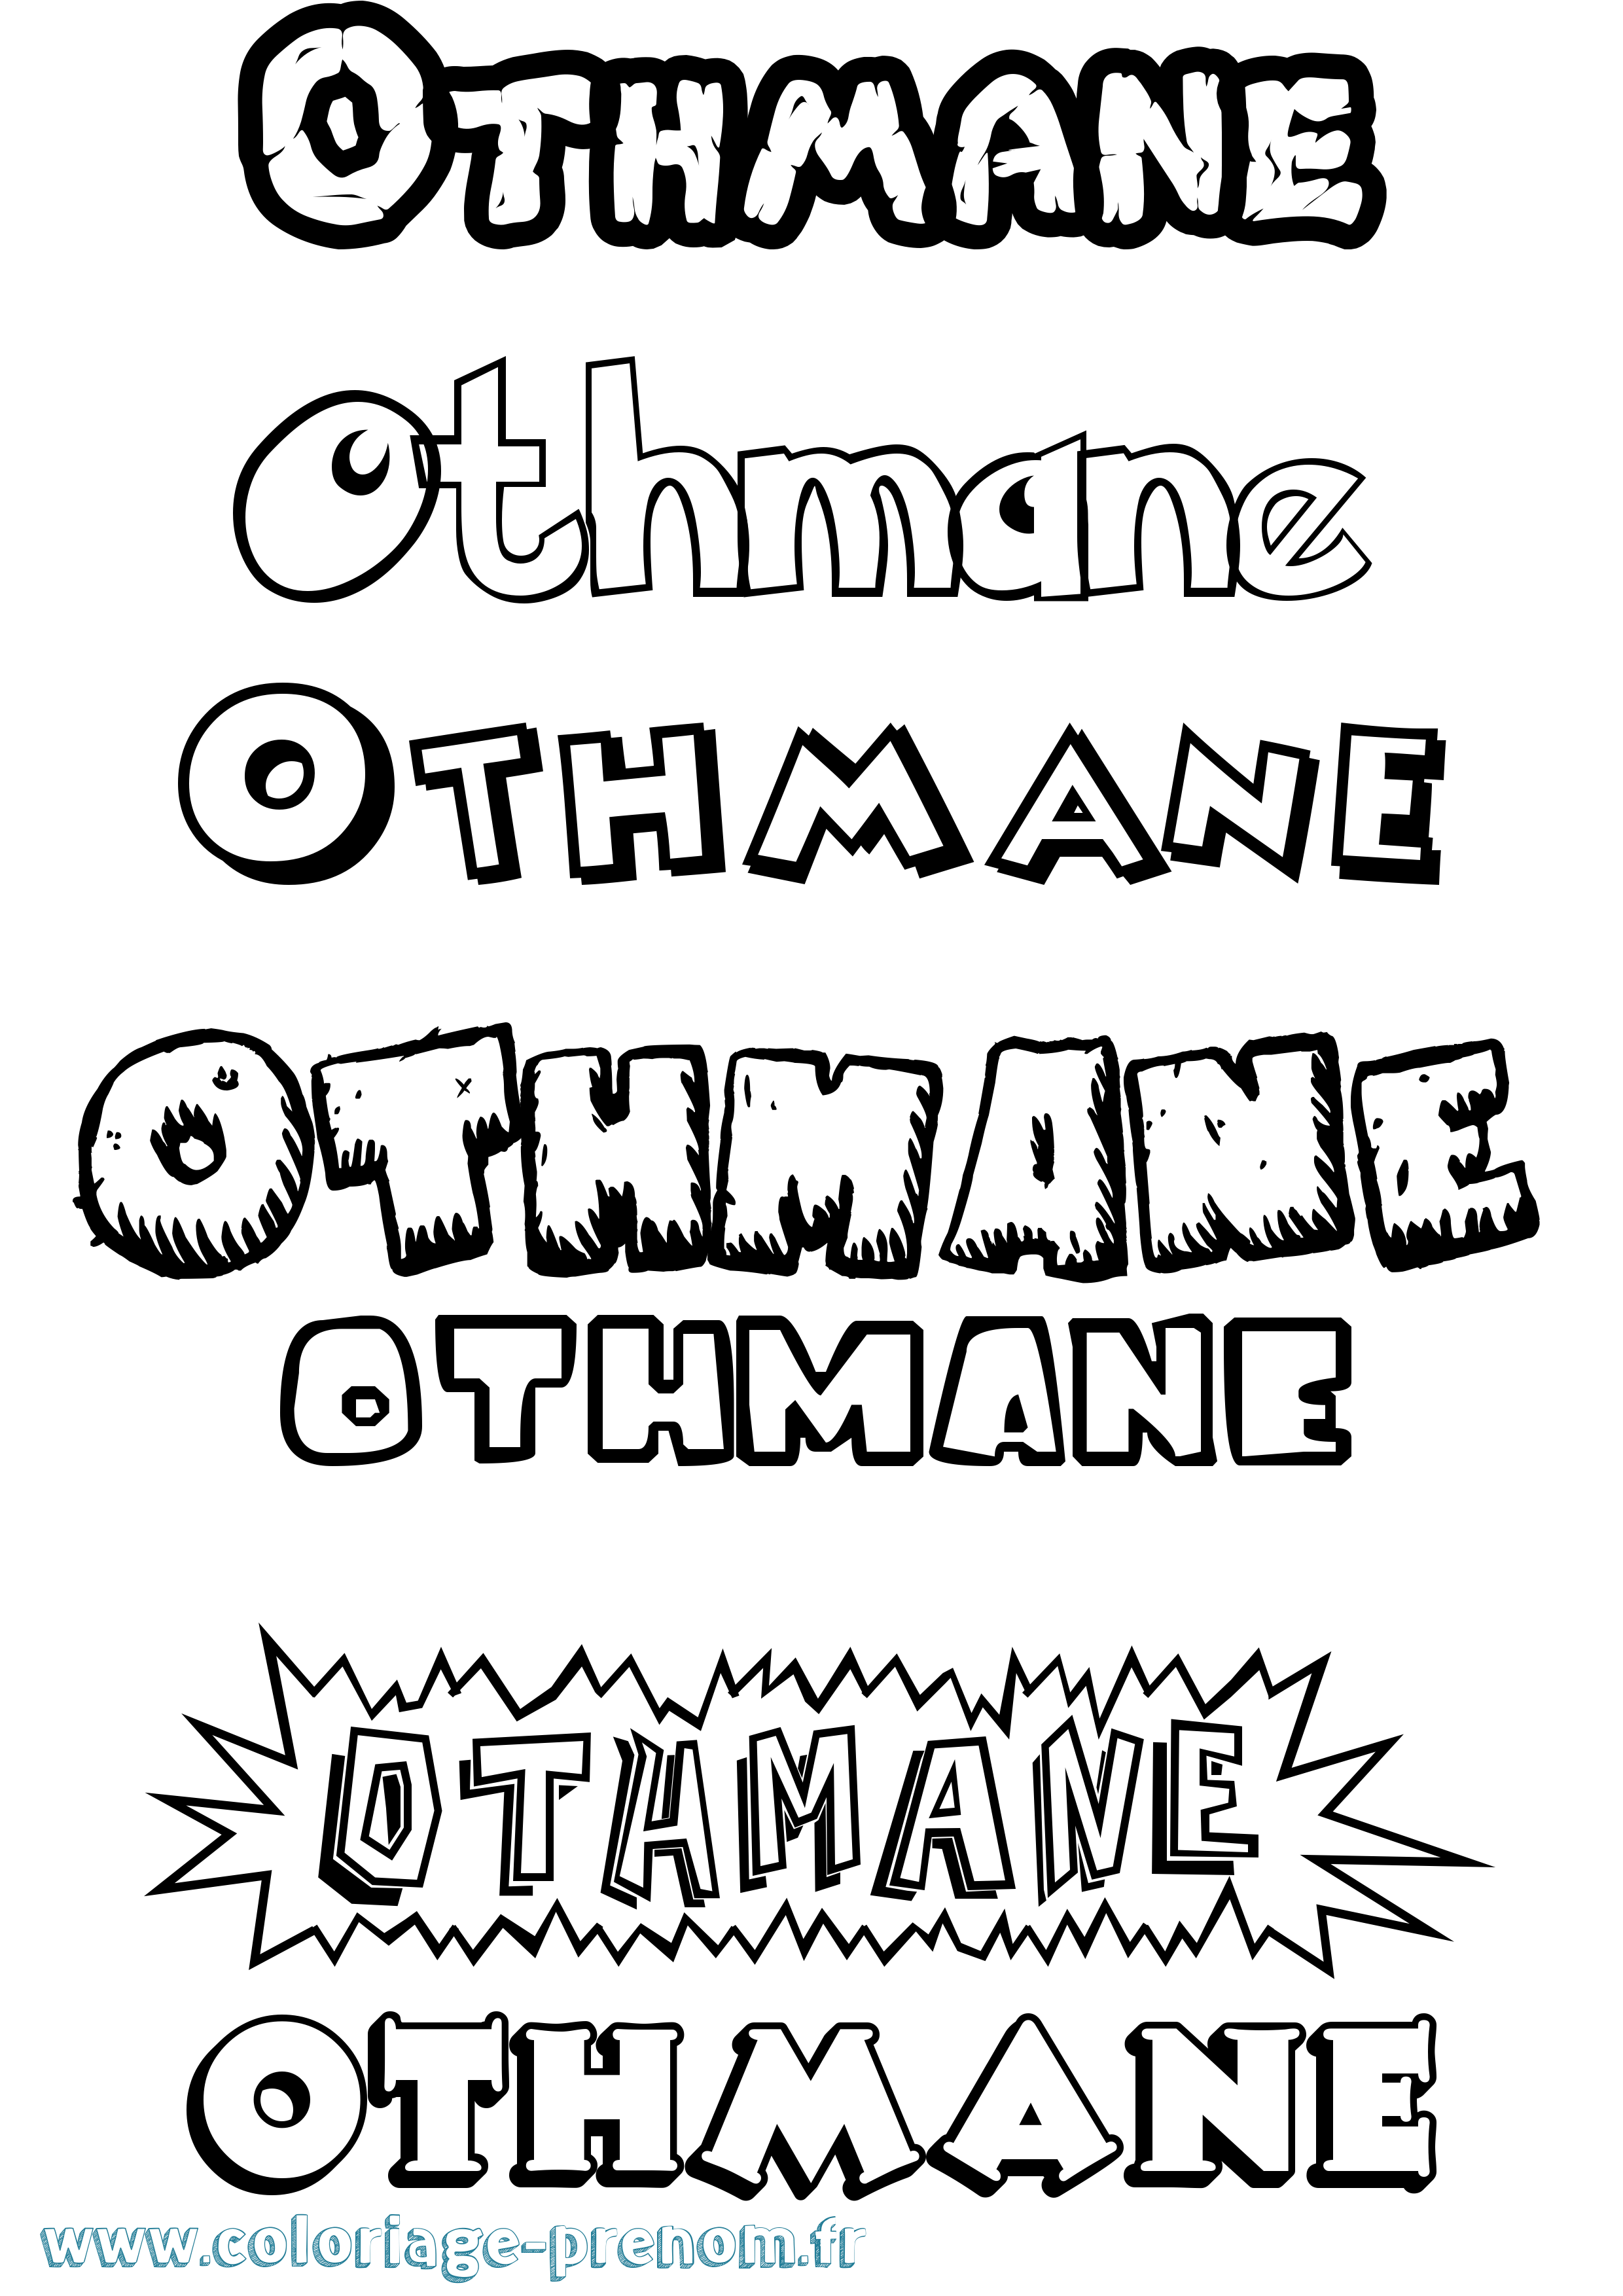 Coloriage prénom Othmane